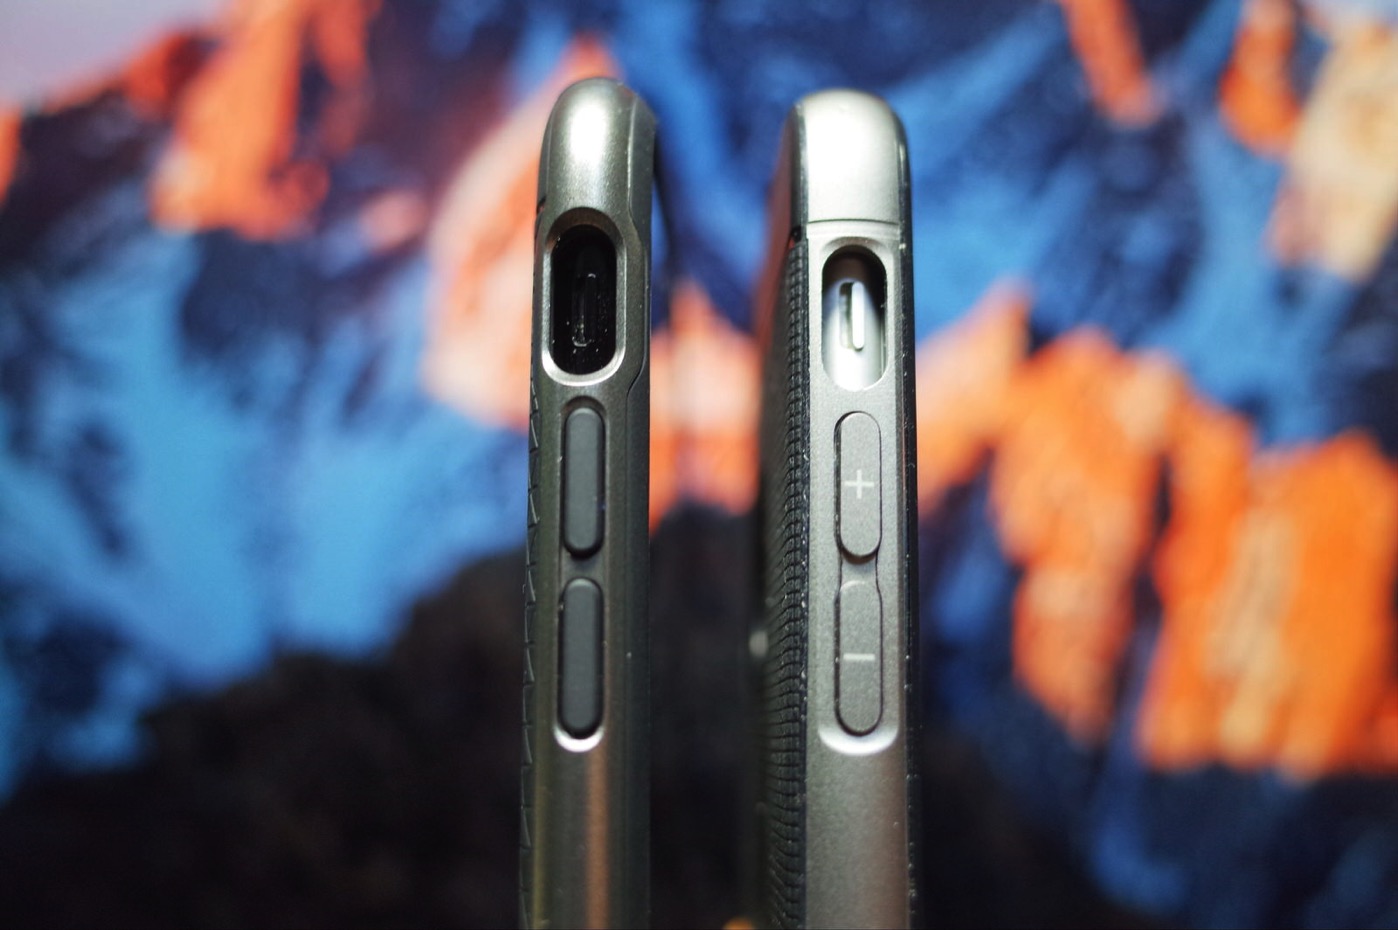 【Spigen】 iPhone7 ケース, ネオ・ハイブリッド [ 米軍MIL規格取得 二重構造 バンパー ] アイフォン 7 用 カバー (iPhone7, ガンメタル)-3